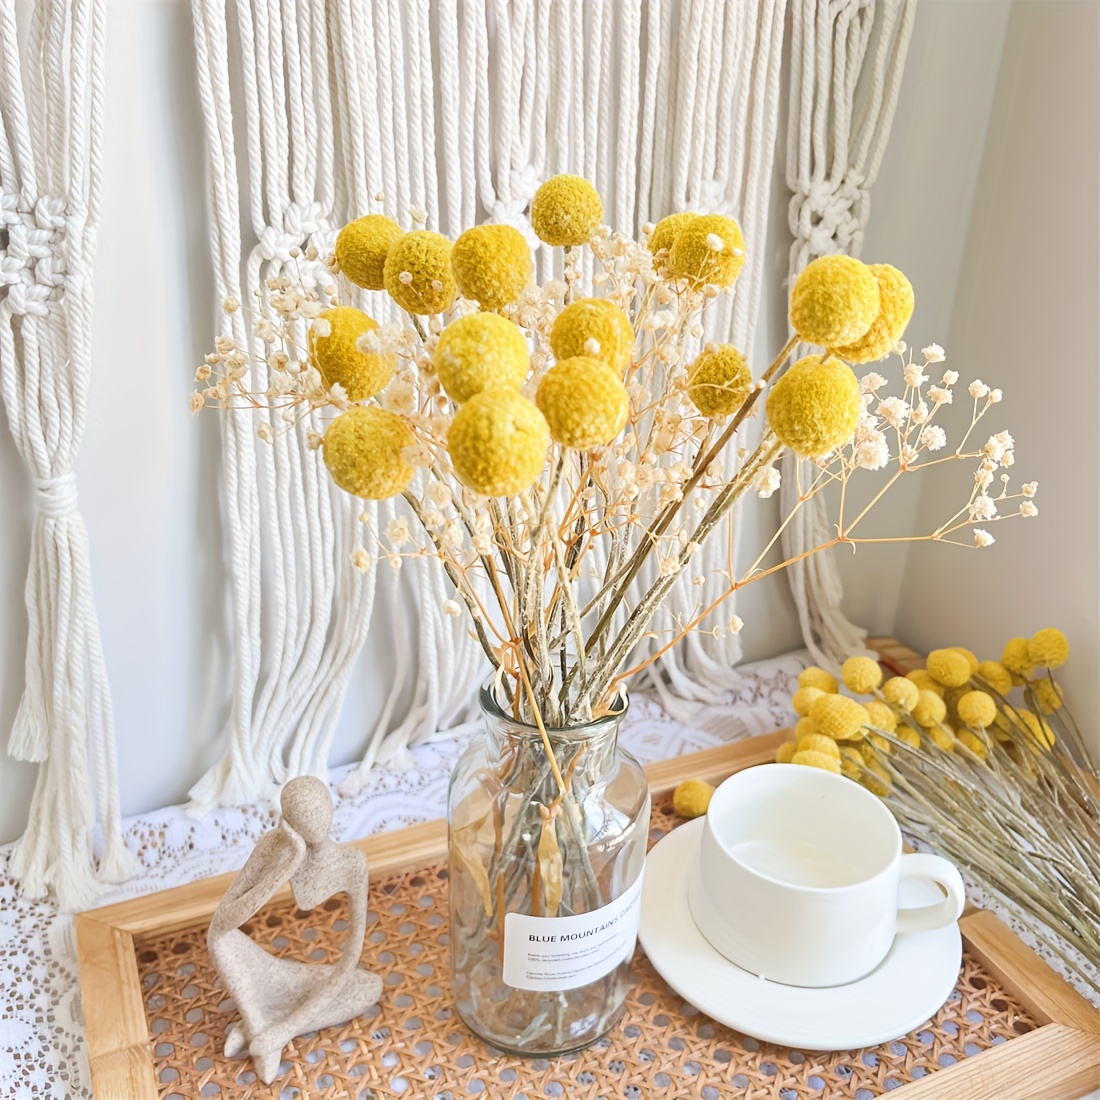  10 tallos de algodón blanco, ramas de flores secas, tallos de  algodón para decoración de boda, flores de algodón, flores secas, decoración  de casa de campo : Hogar y Cocina